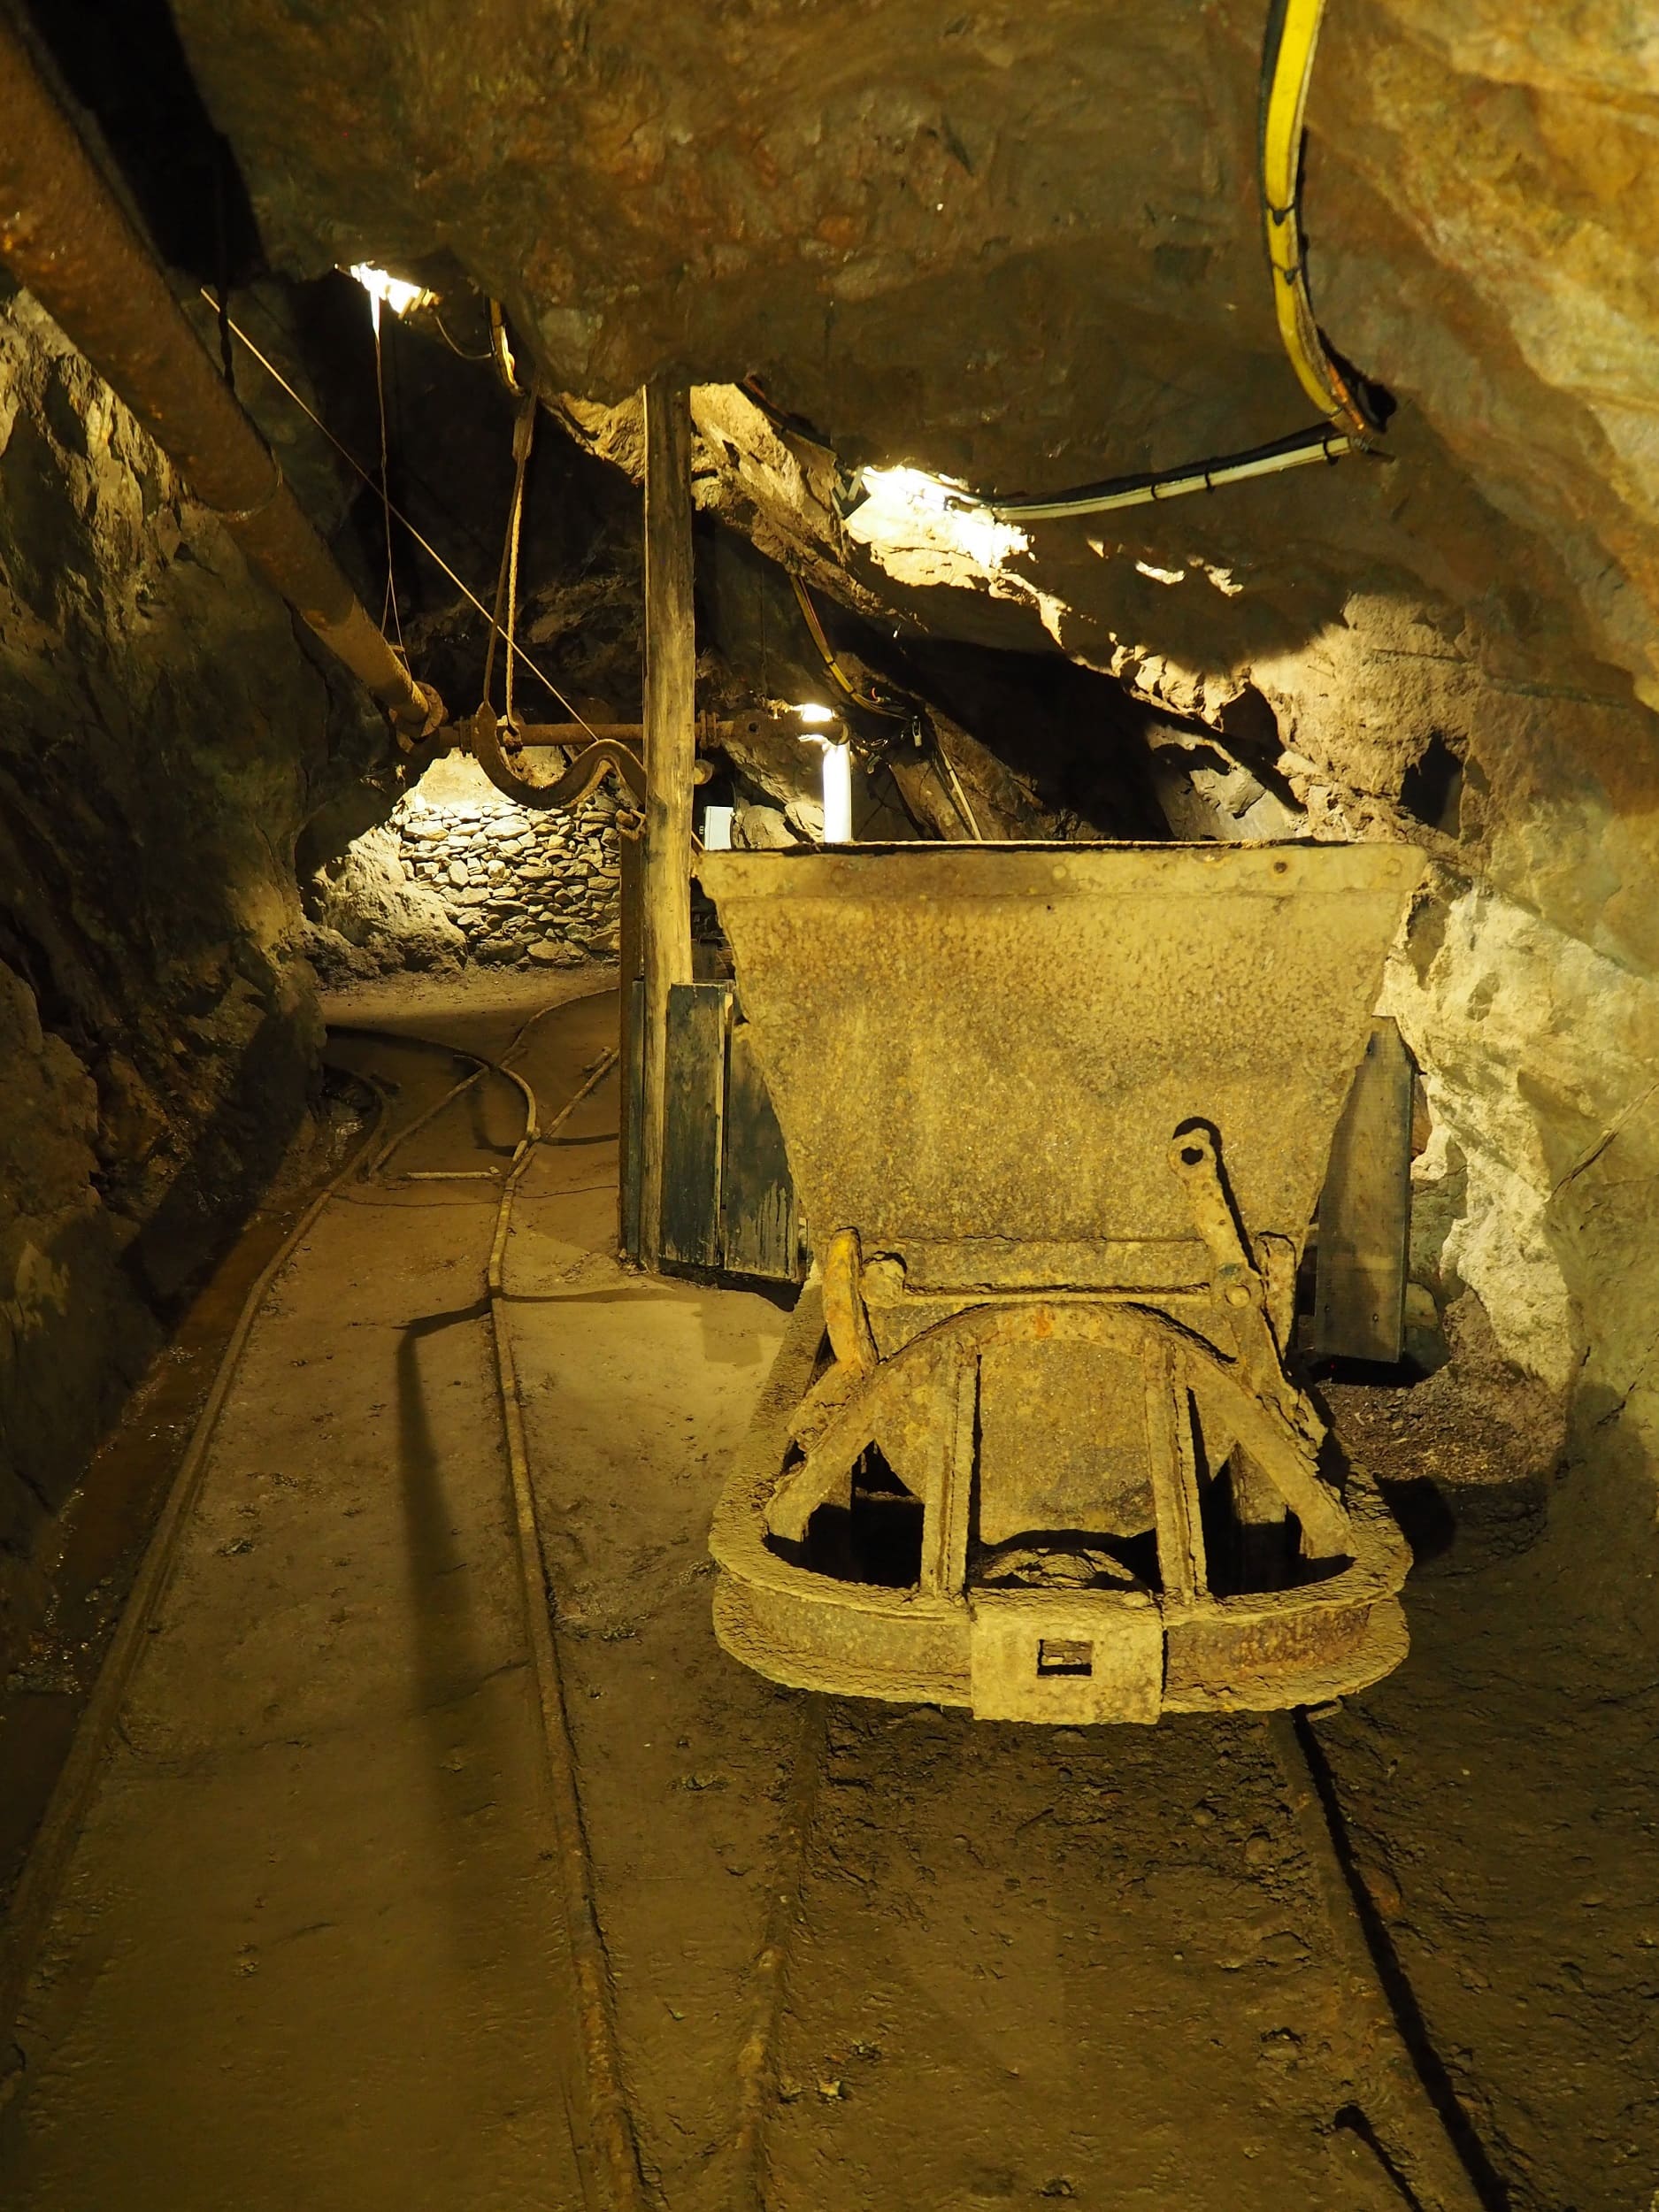 Mining wagon on tracks in a mine